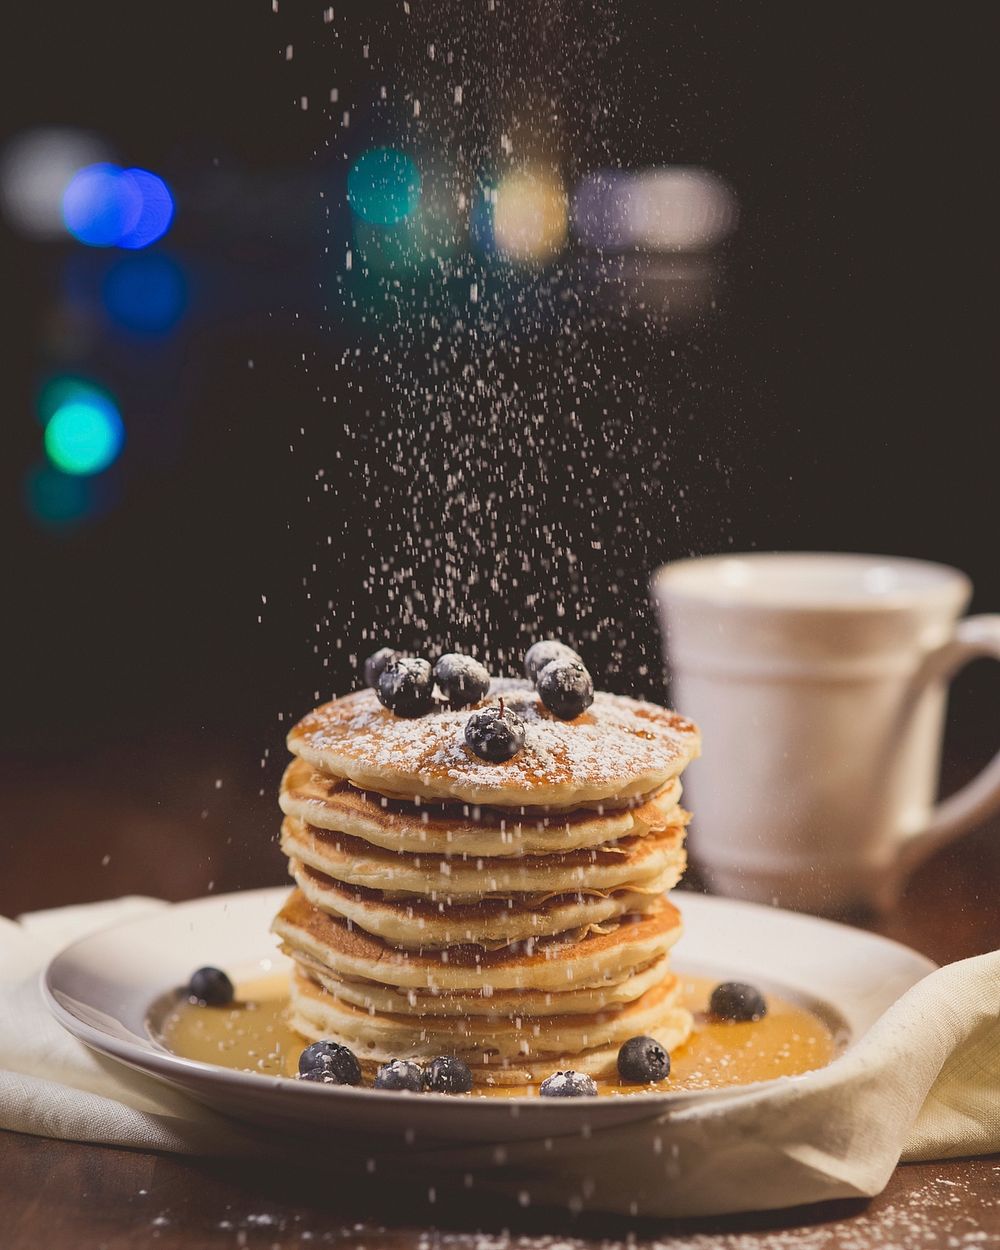 Free blueberry pancake with syrup image, public domain food CC0 photo.